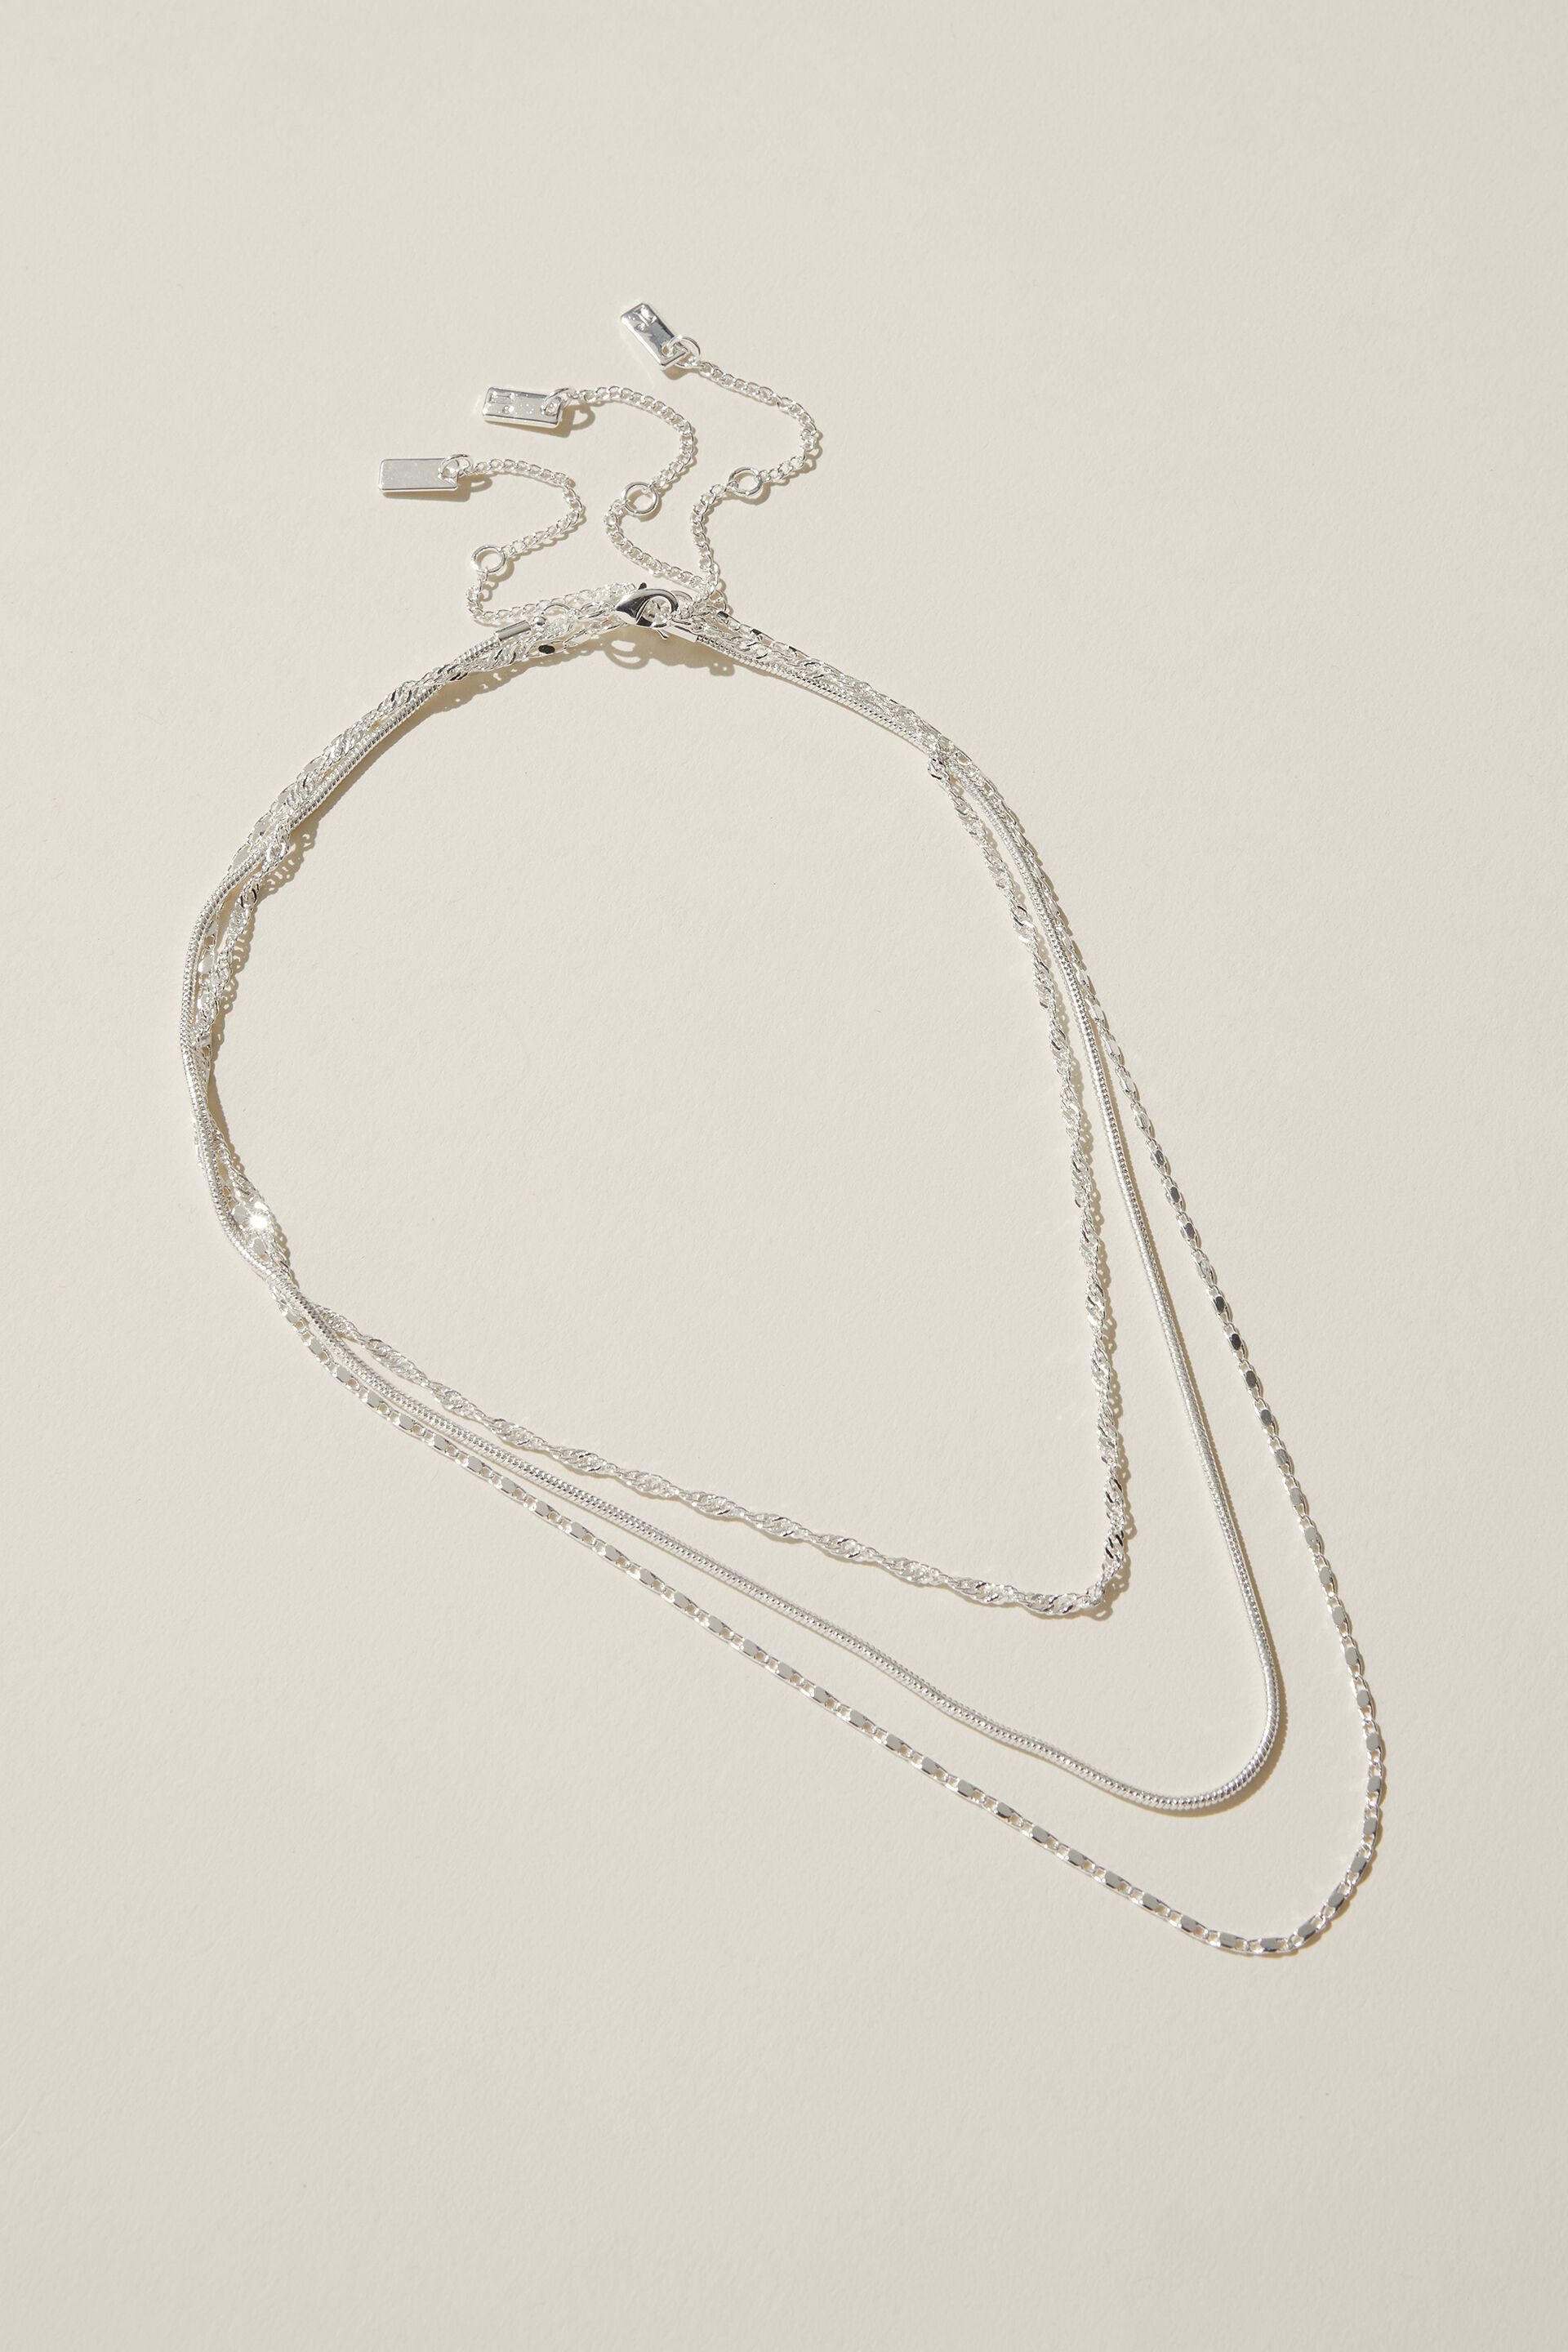 Brielle Chain Necklace in Silver | Kendra Scott